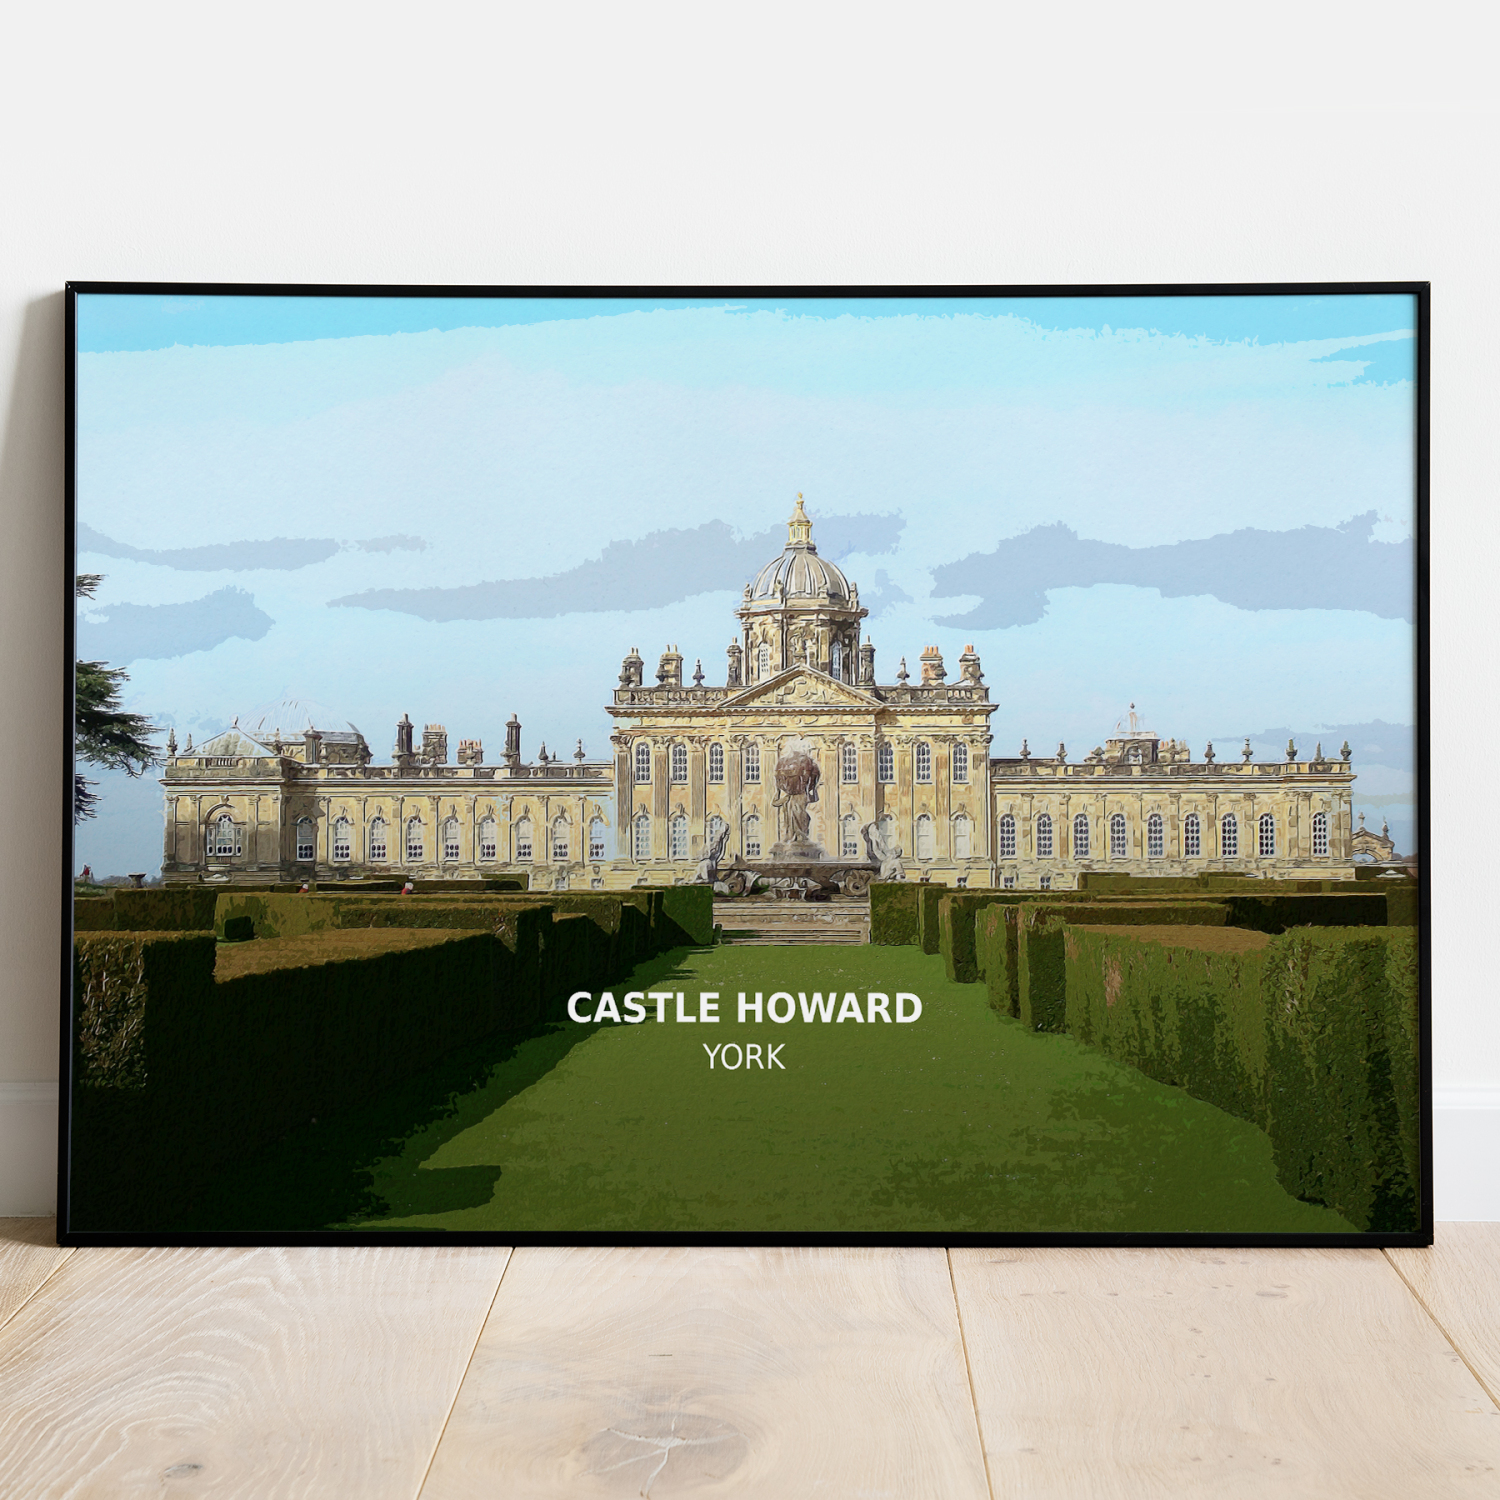 Castle Howard - York - Print - A4 - Standard - Print Only